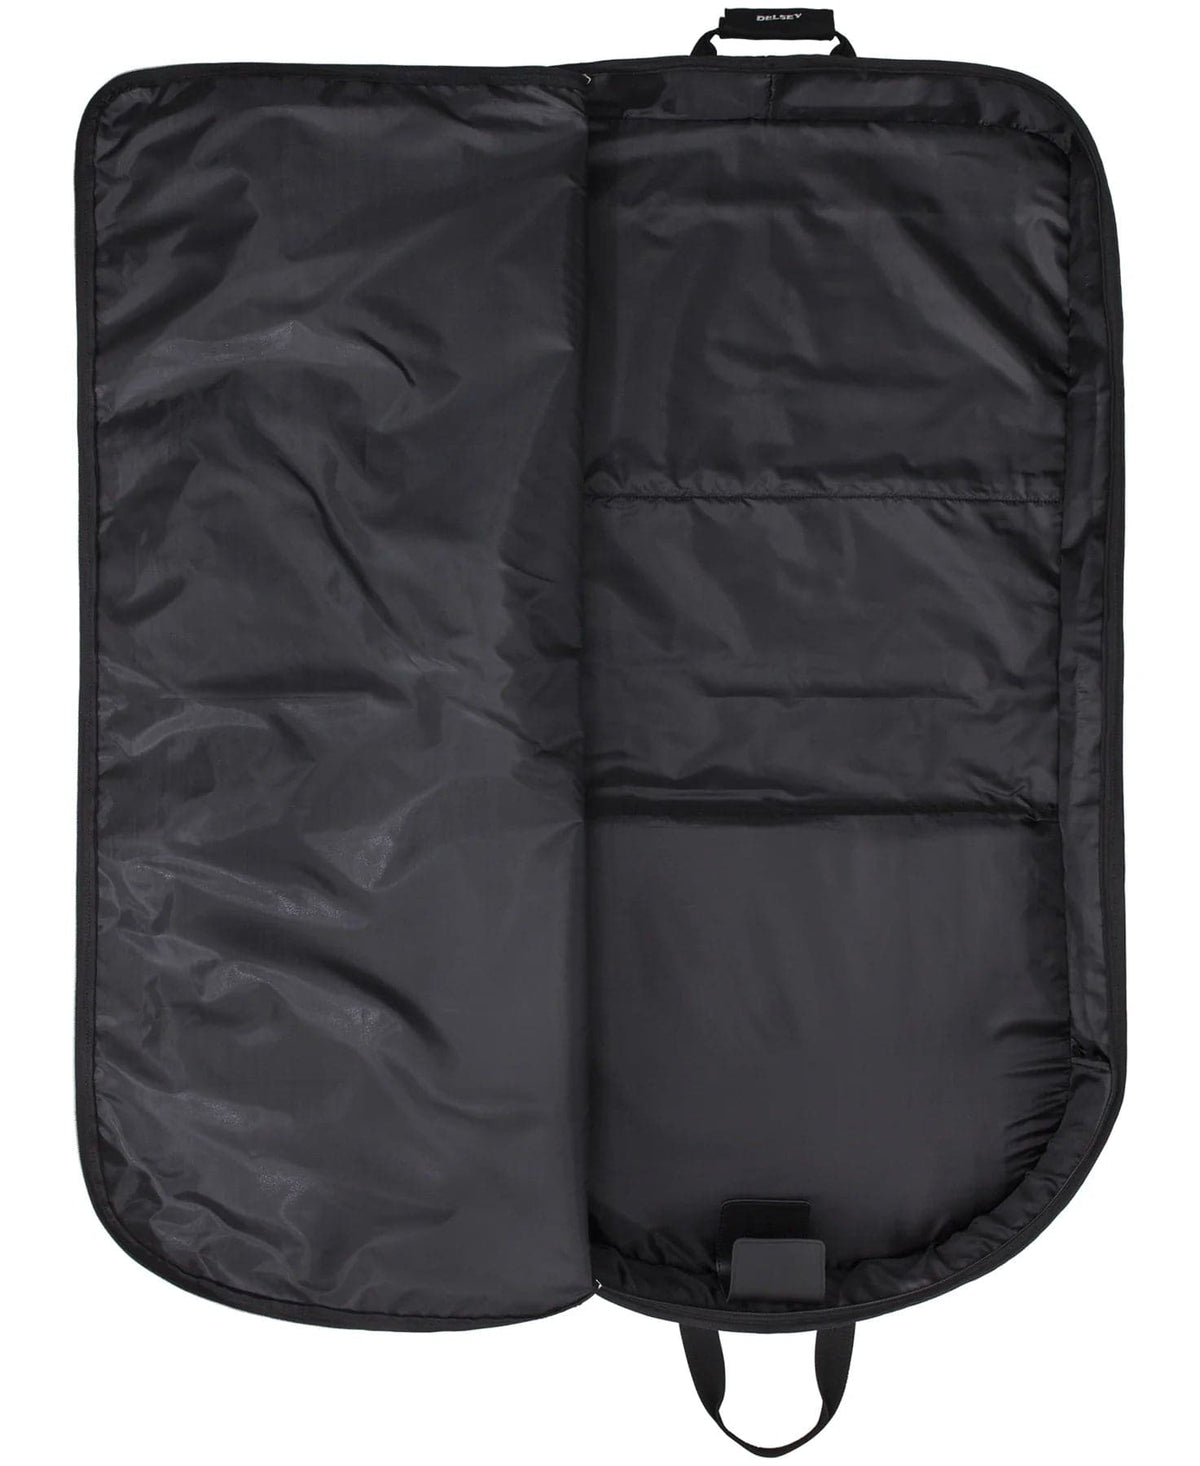 Delsey Garment Cover Bag - 45" Medium